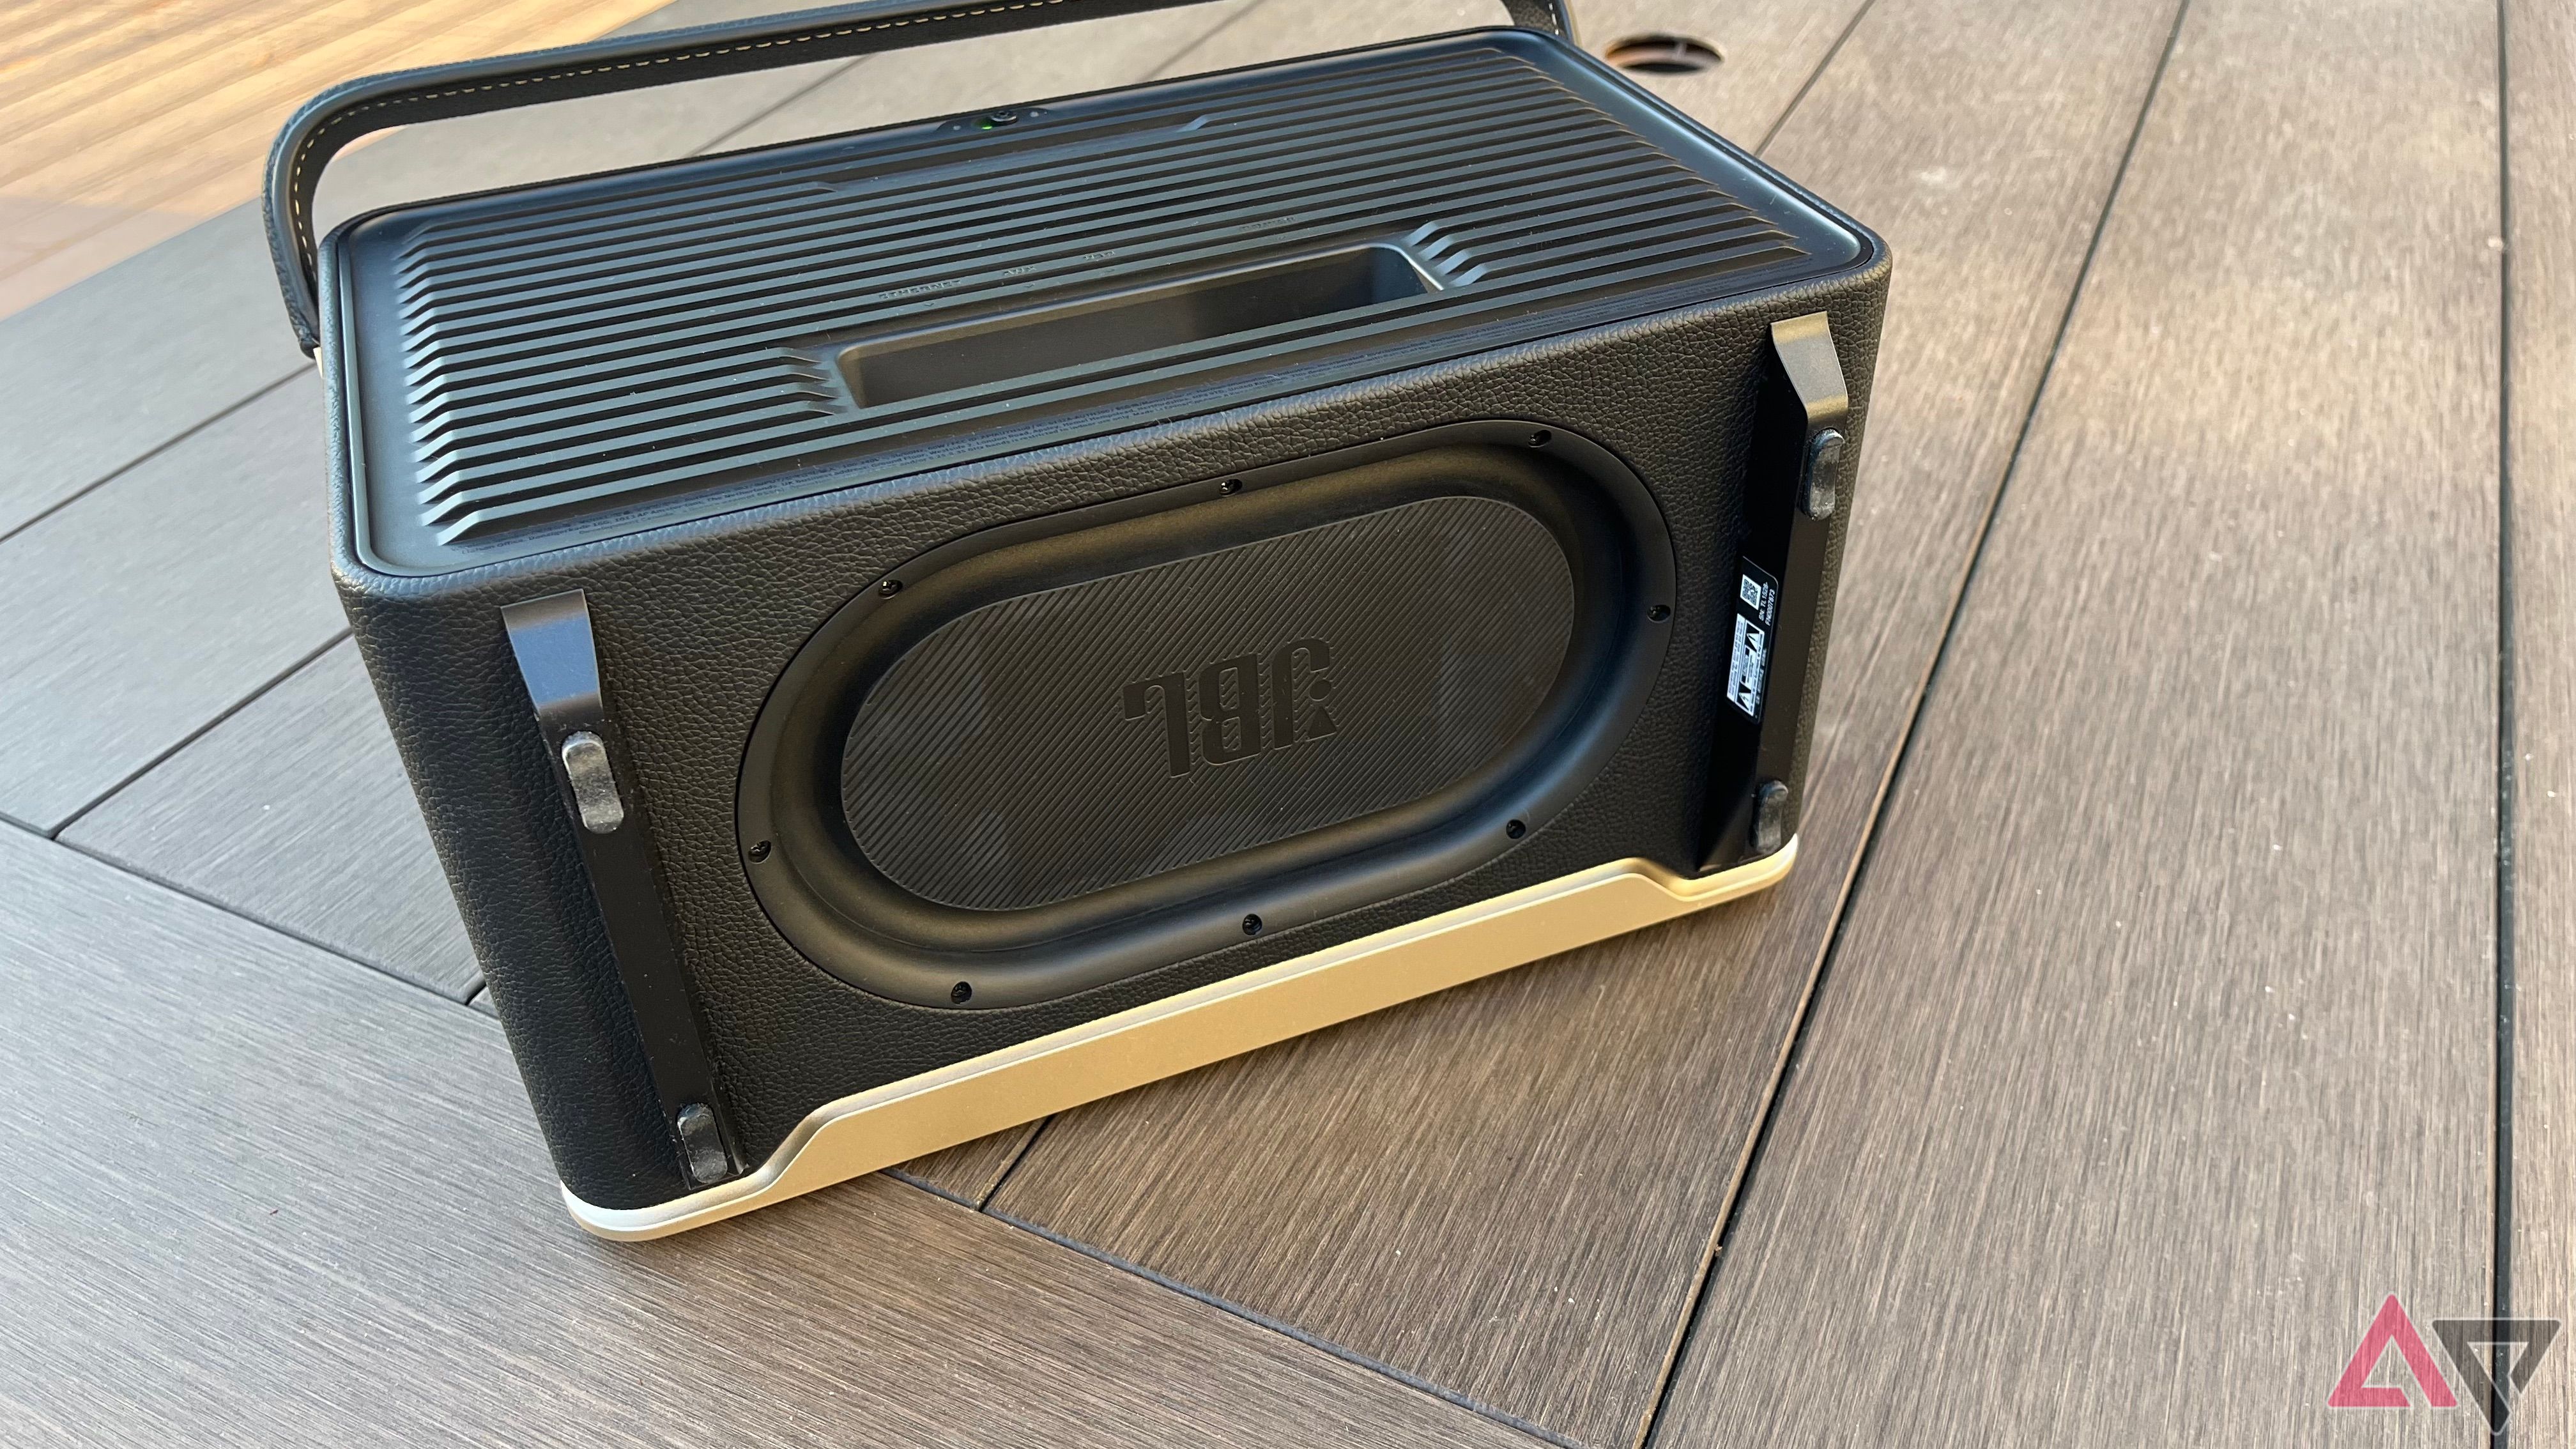 JBL Authentics 300 Black Smart Home Speaker with WIFI